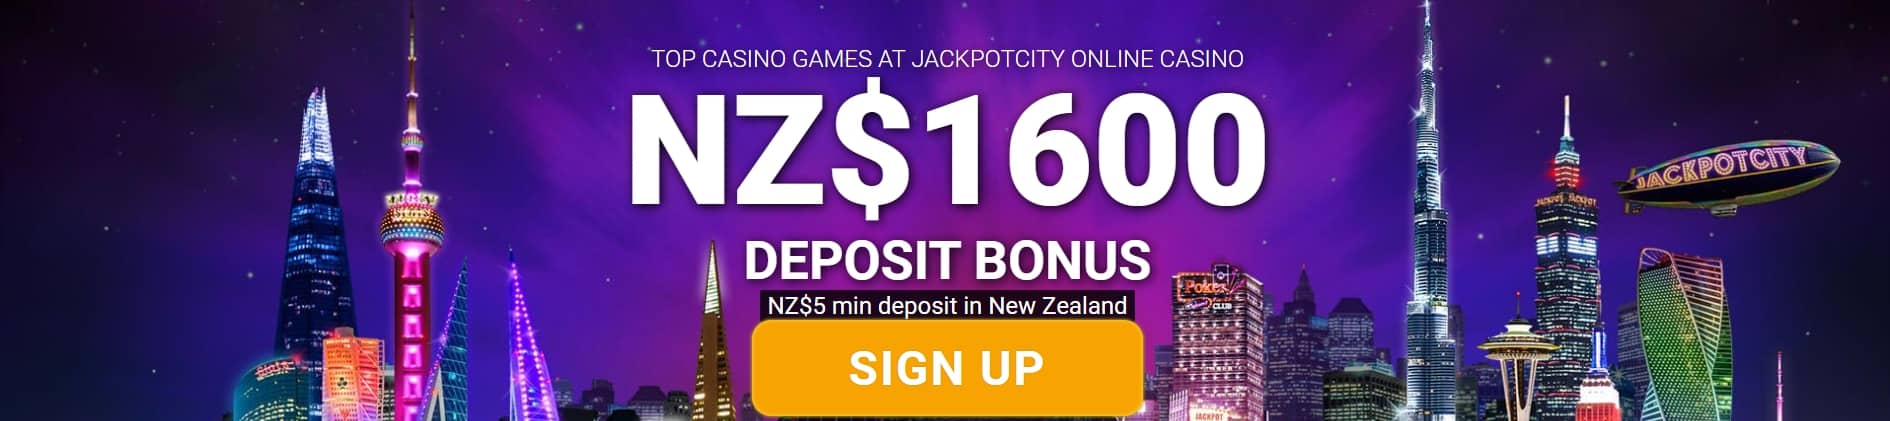 5 dollar deposit casino jackpotcity